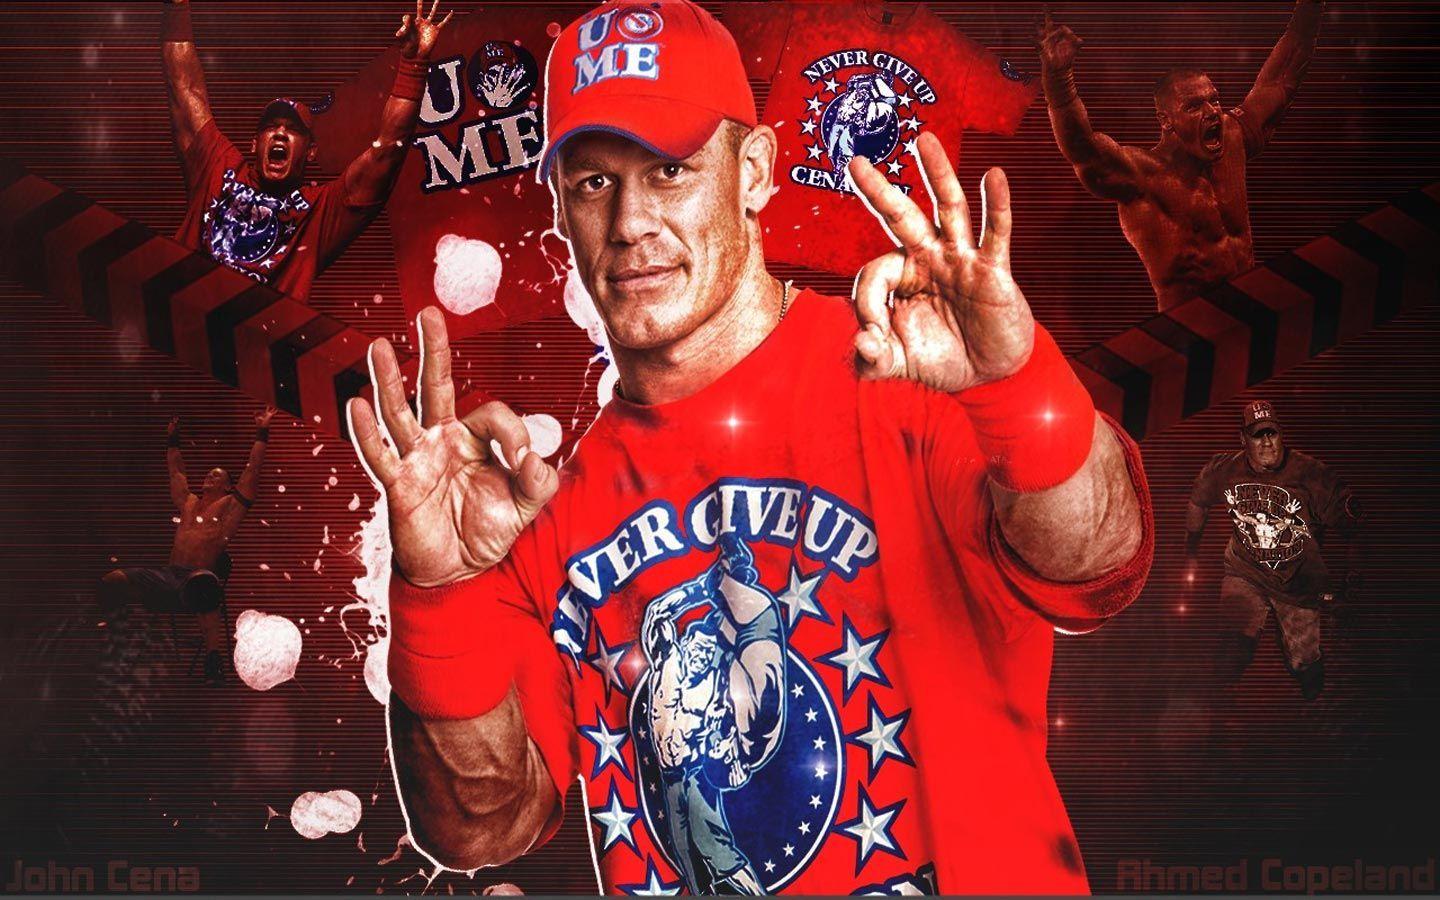 WWE Wallpaper Free John Cena 1920×1080 John Cena Image Wallpaper